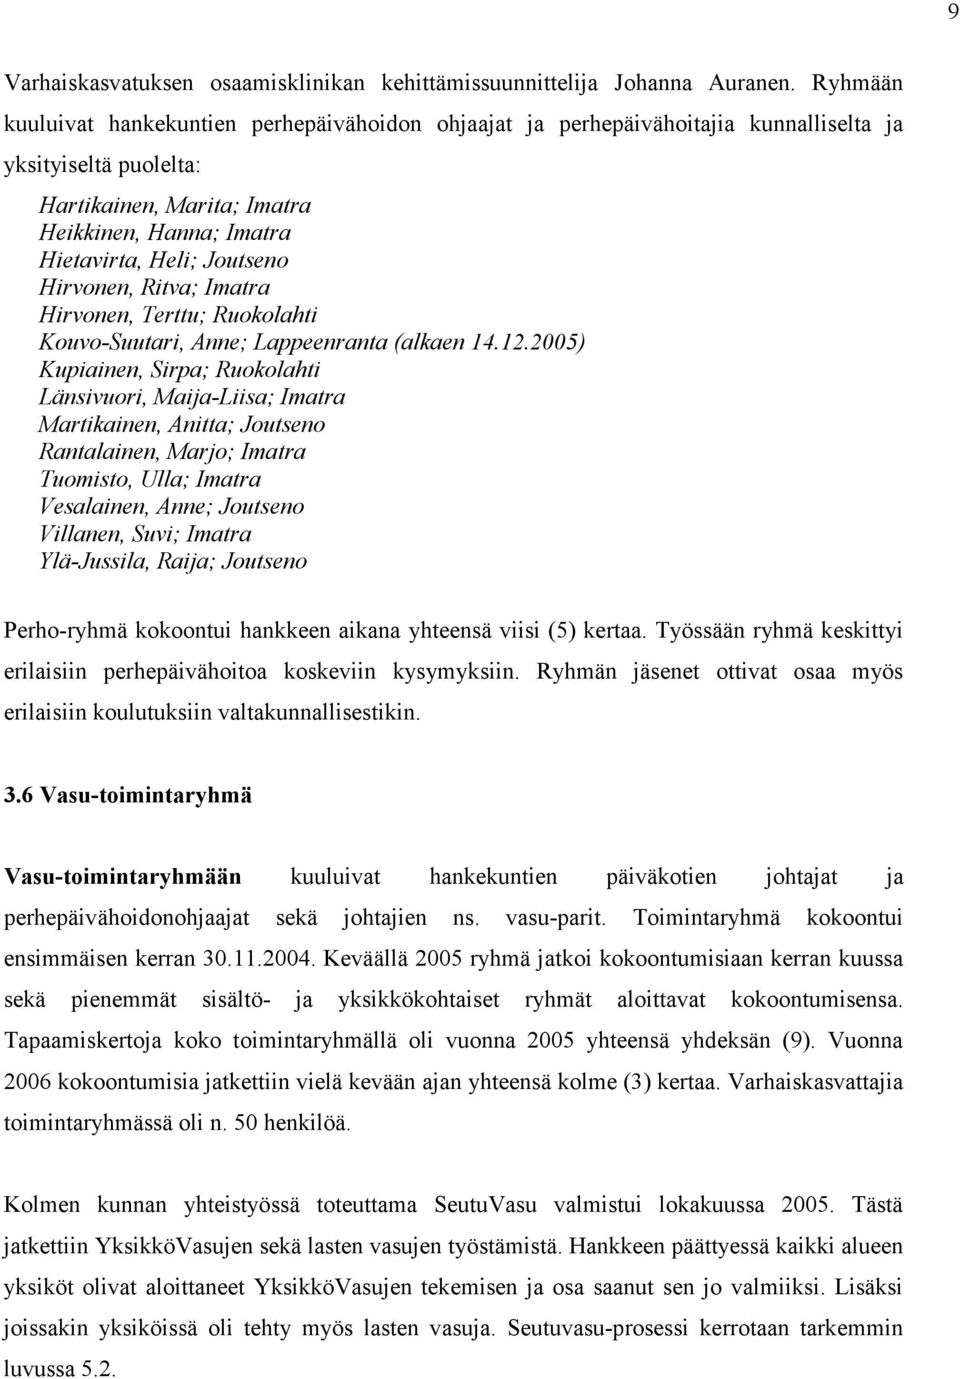 Hirvonen, Ritva; Imatra Hirvonen, Terttu; Ruokolahti Kouvo-Suutari, Anne; Lappeenranta (alkaen 14.12.